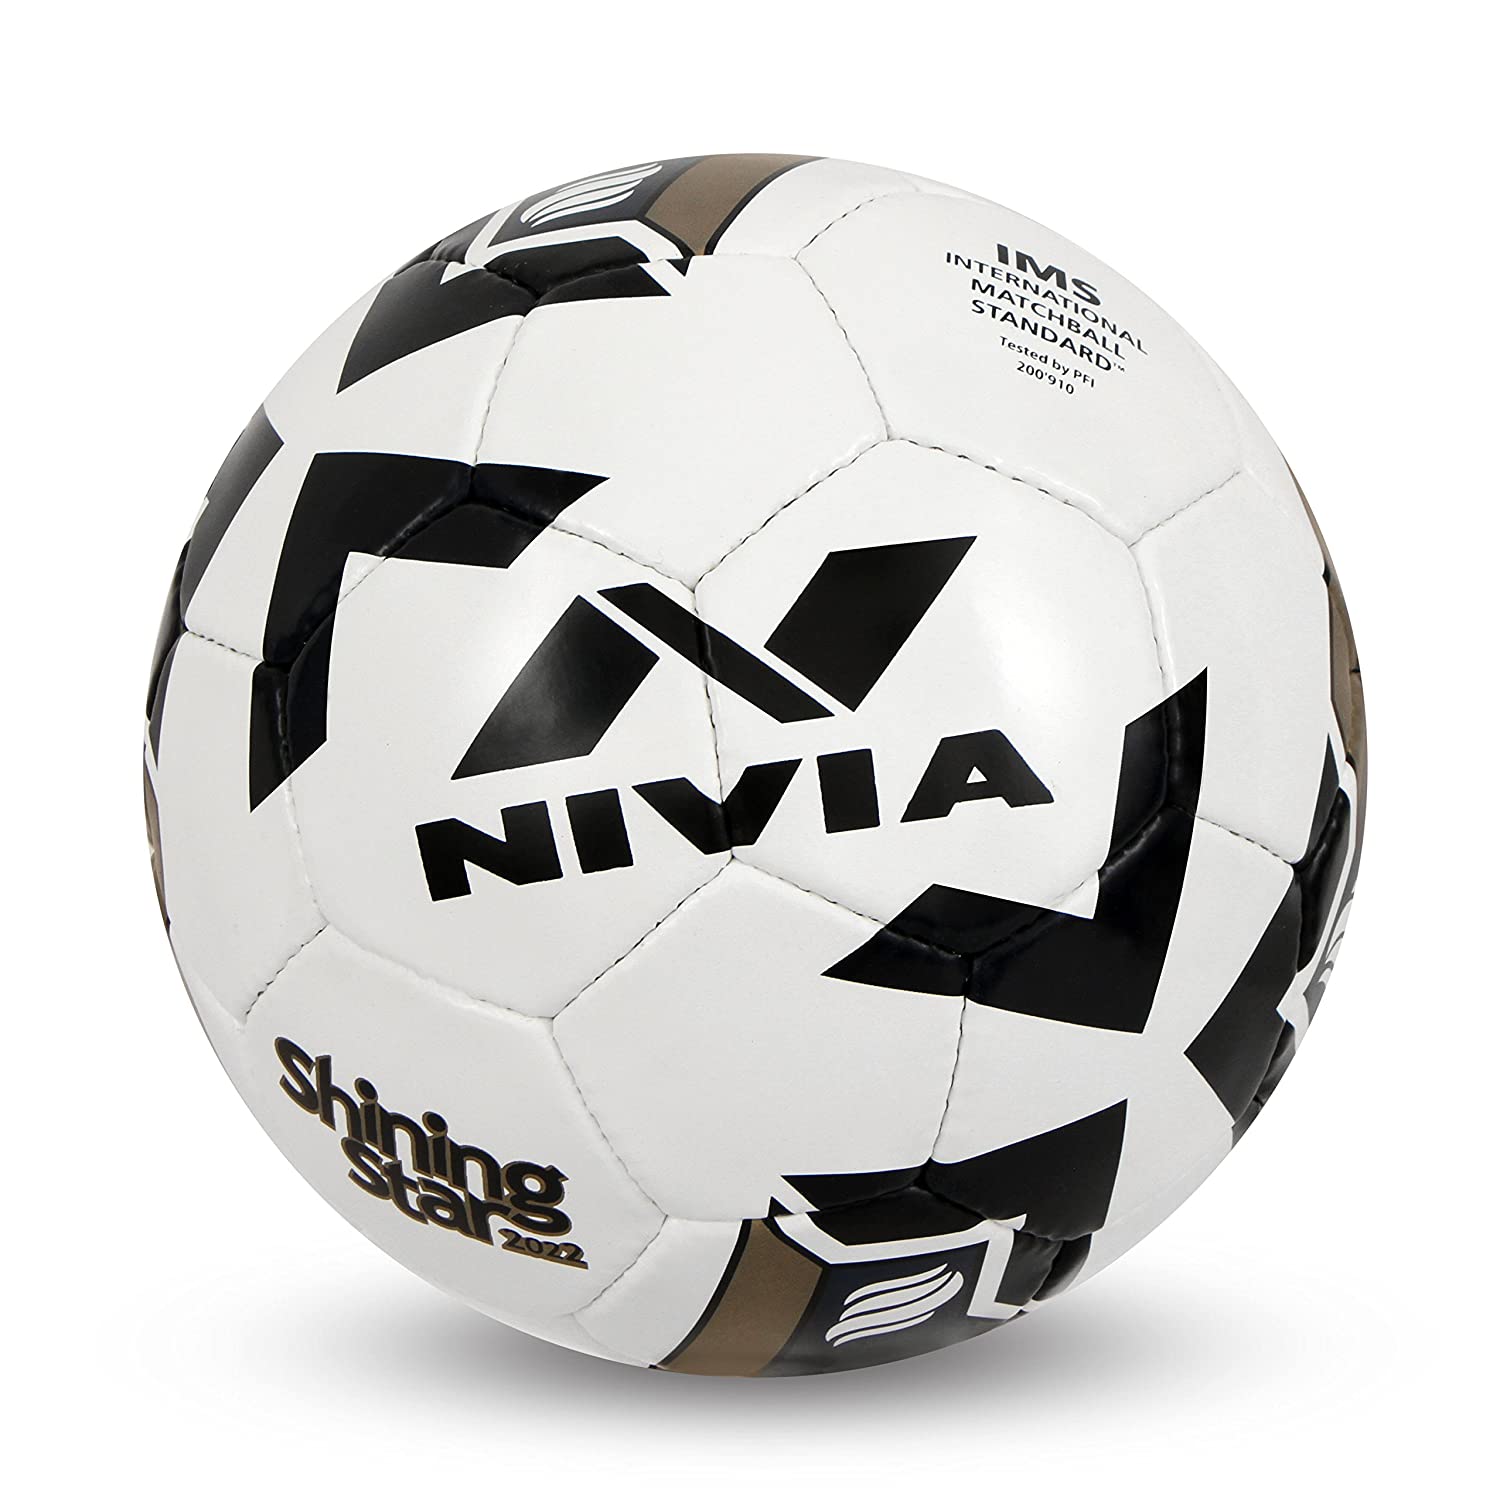 Nivia Shining Star Football, White - Size 5 - Best Price online Prokicksports.com